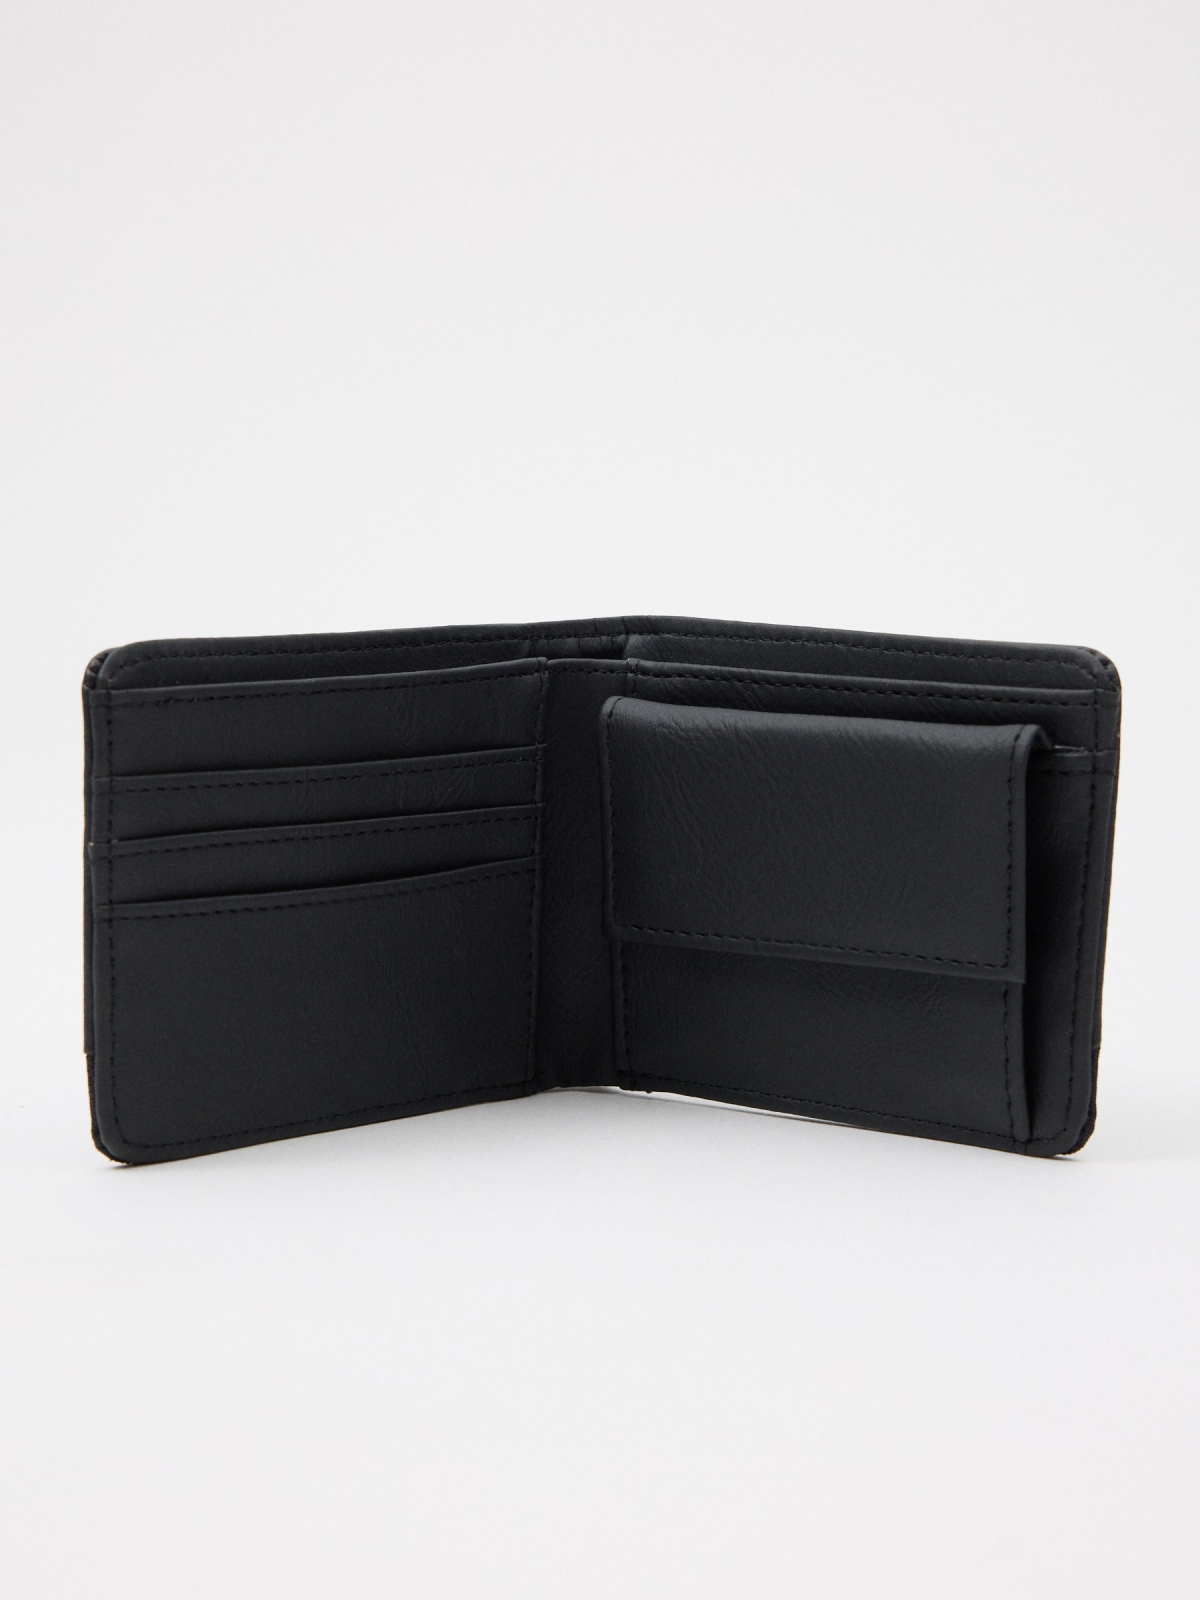 Men's black leatherette wallet black back view